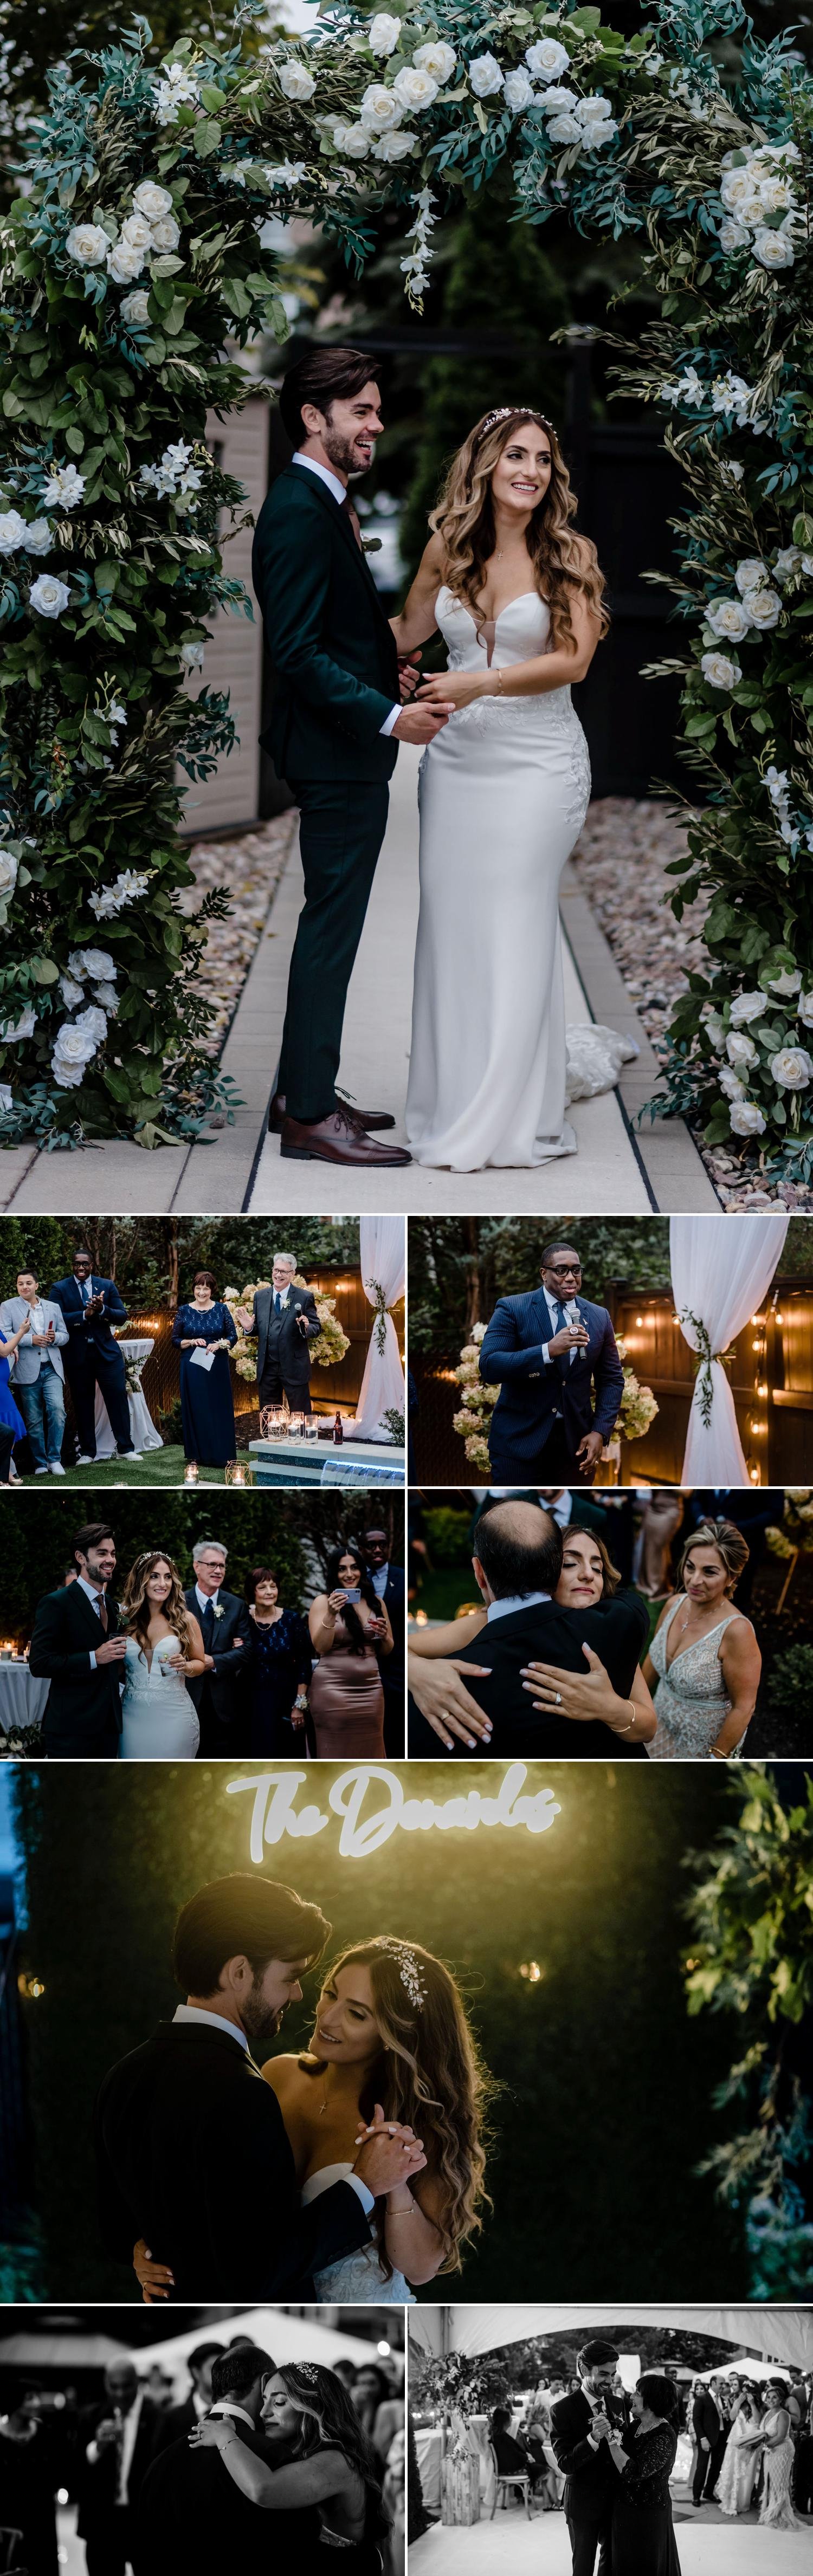 photos of a stylish backyard Lebanese wedding reception